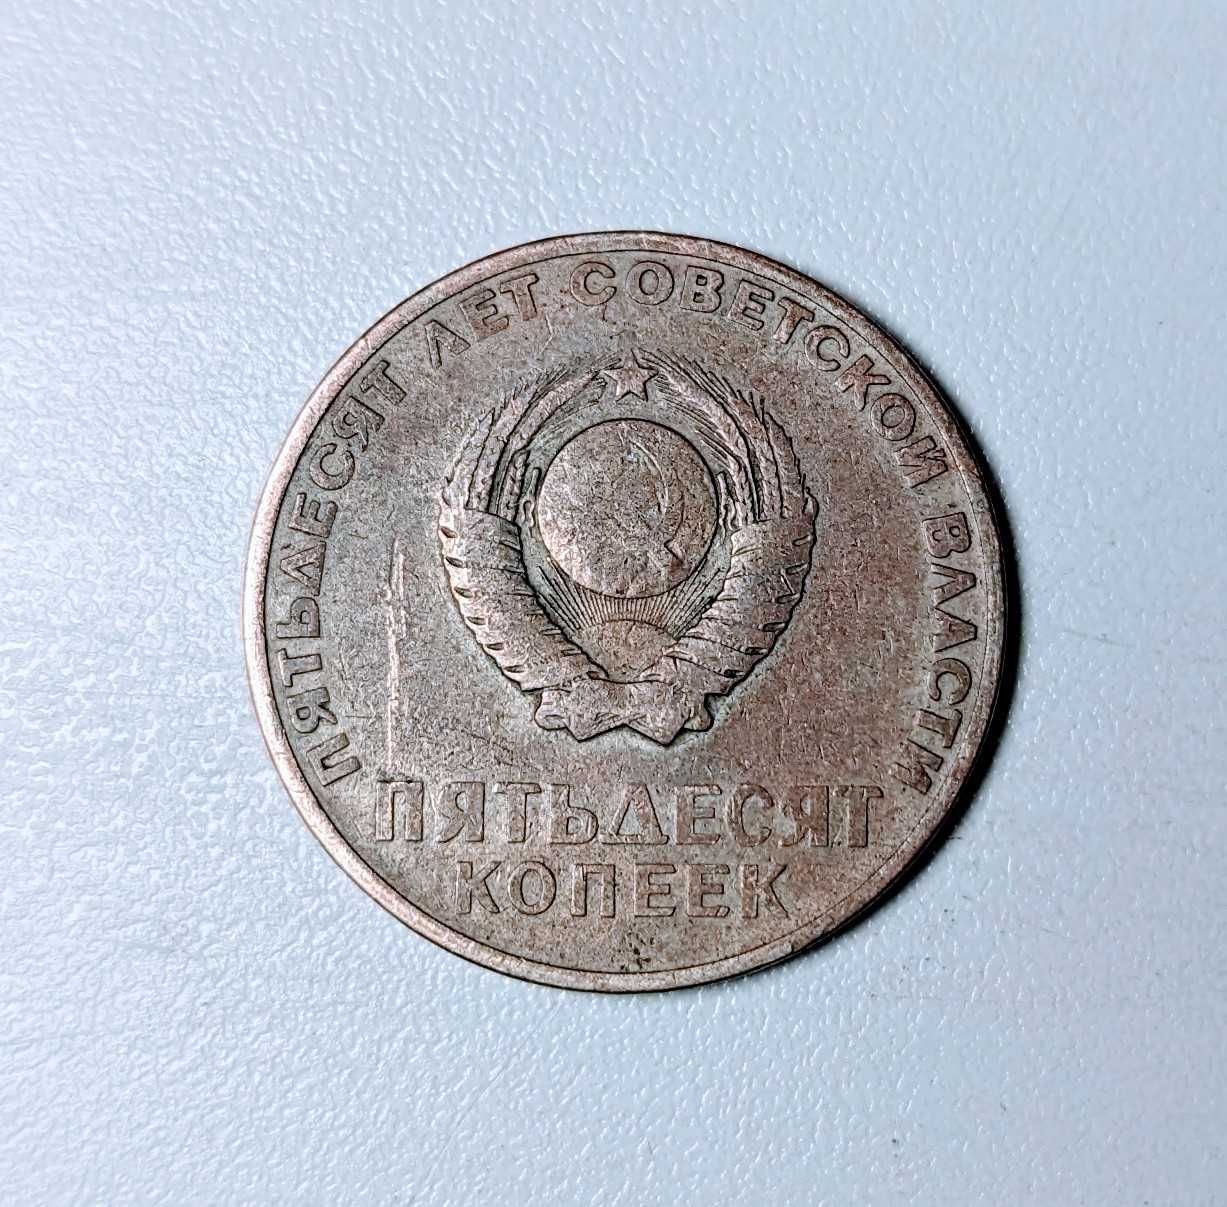 50 копеек монета СССР